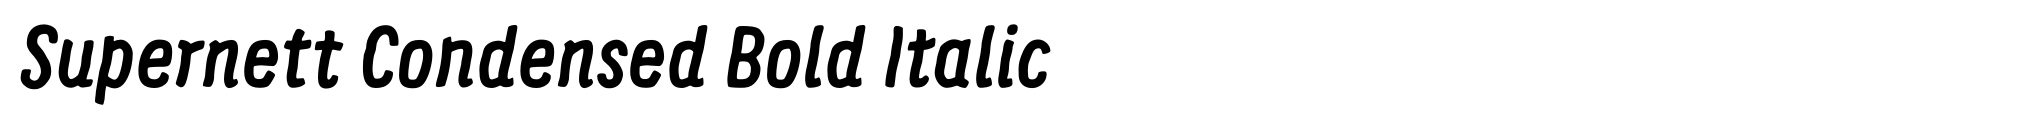 Supernett Condensed Bold Italic image